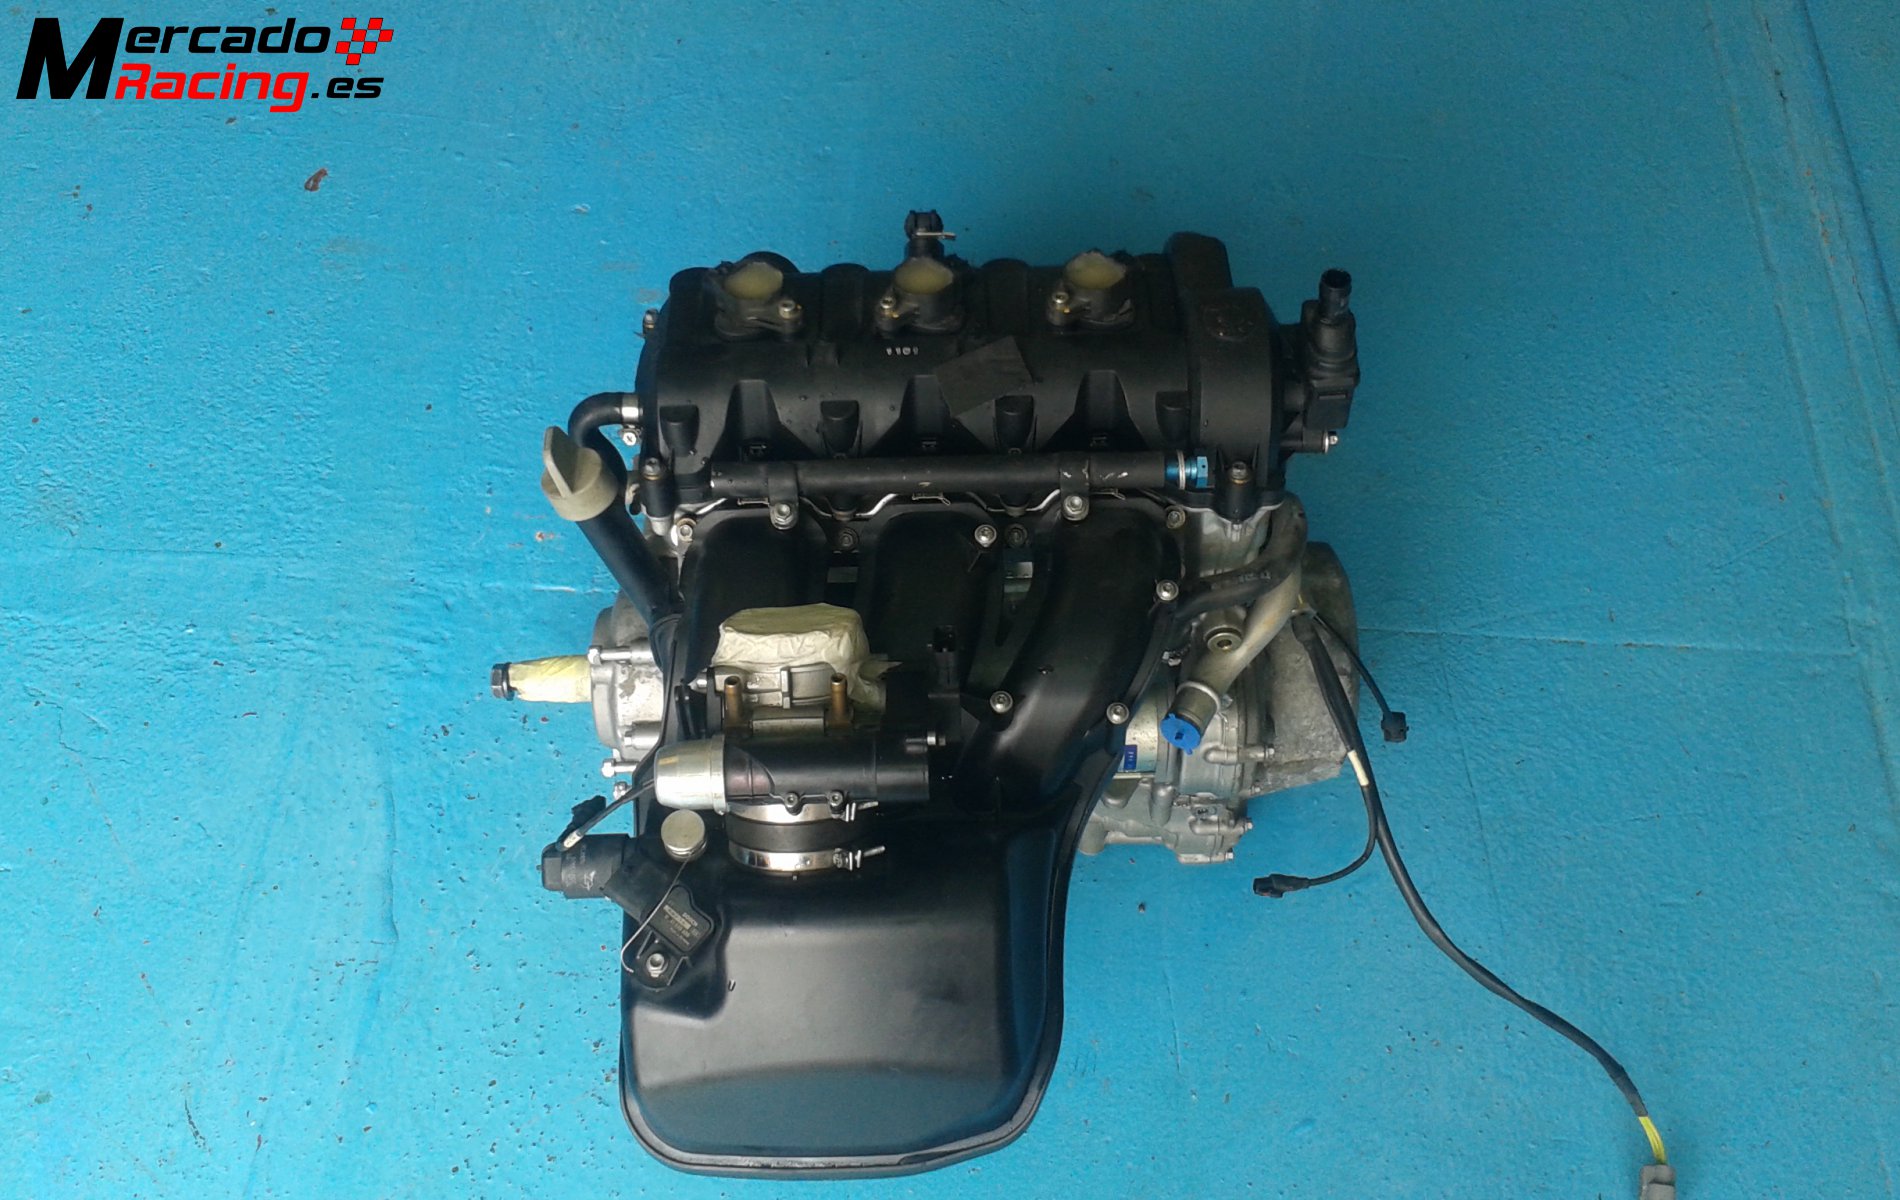 Motor rotax modelo 1203